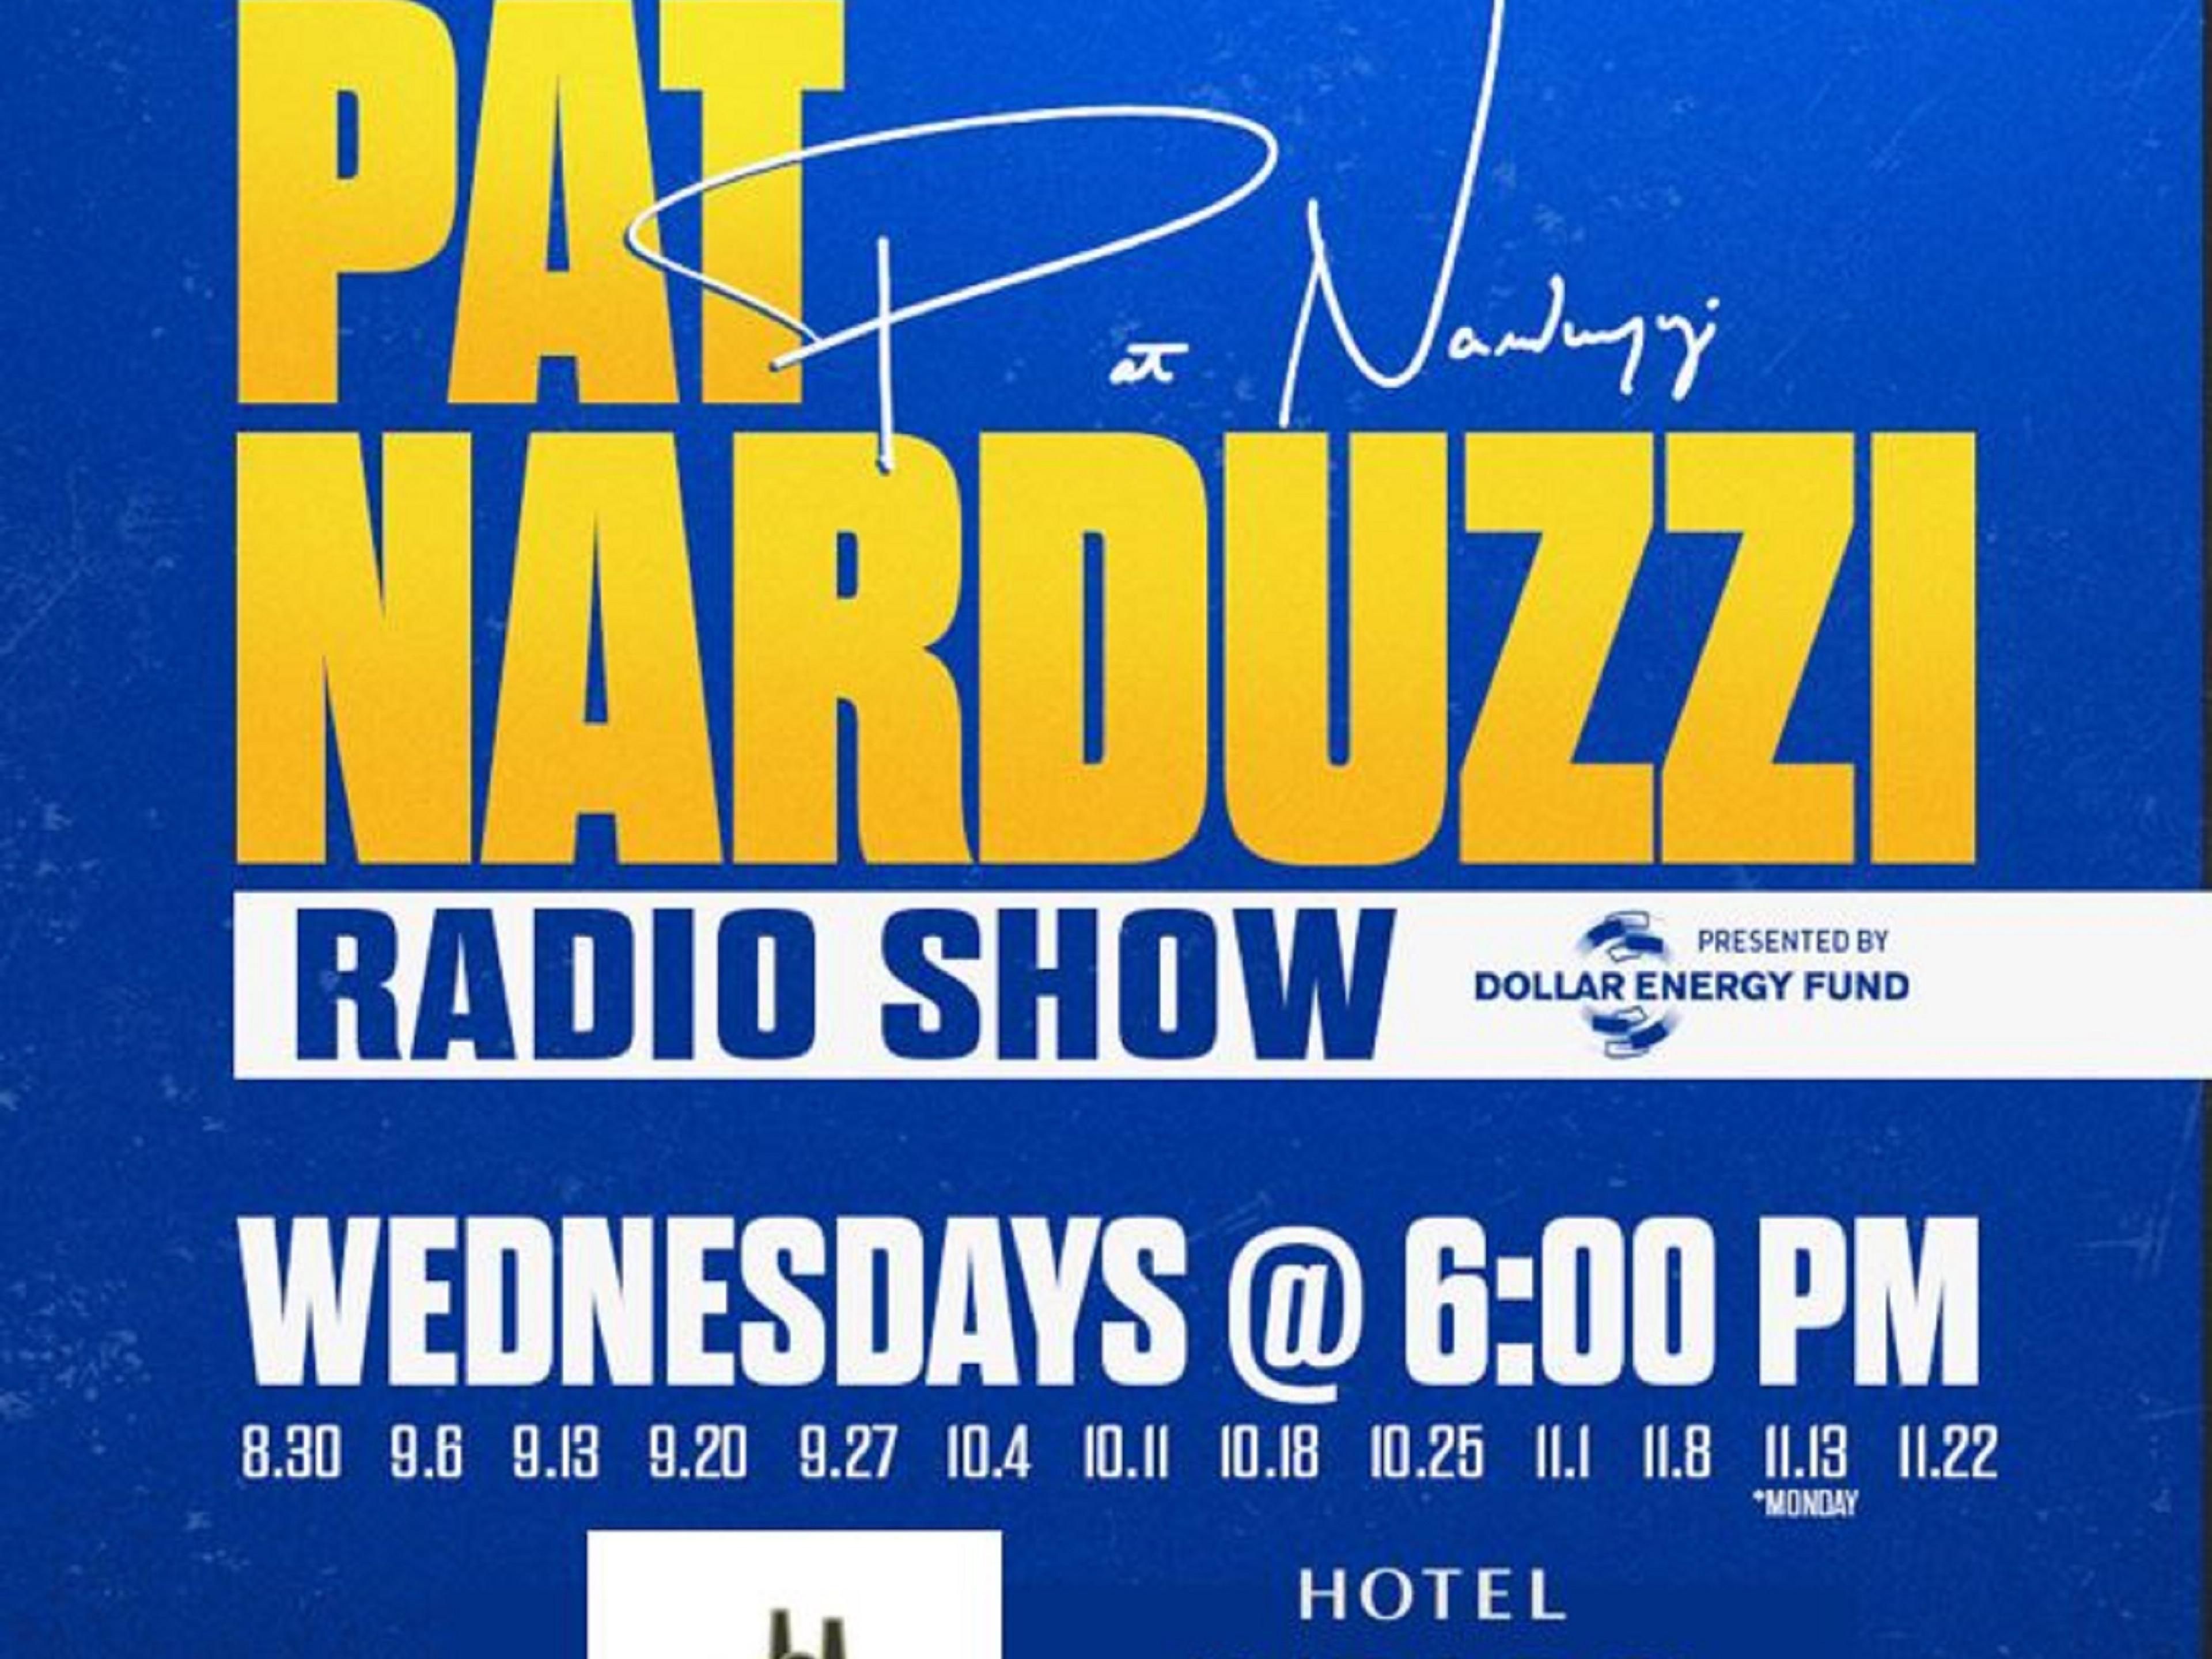 The Pat Narduzzi Radio Show